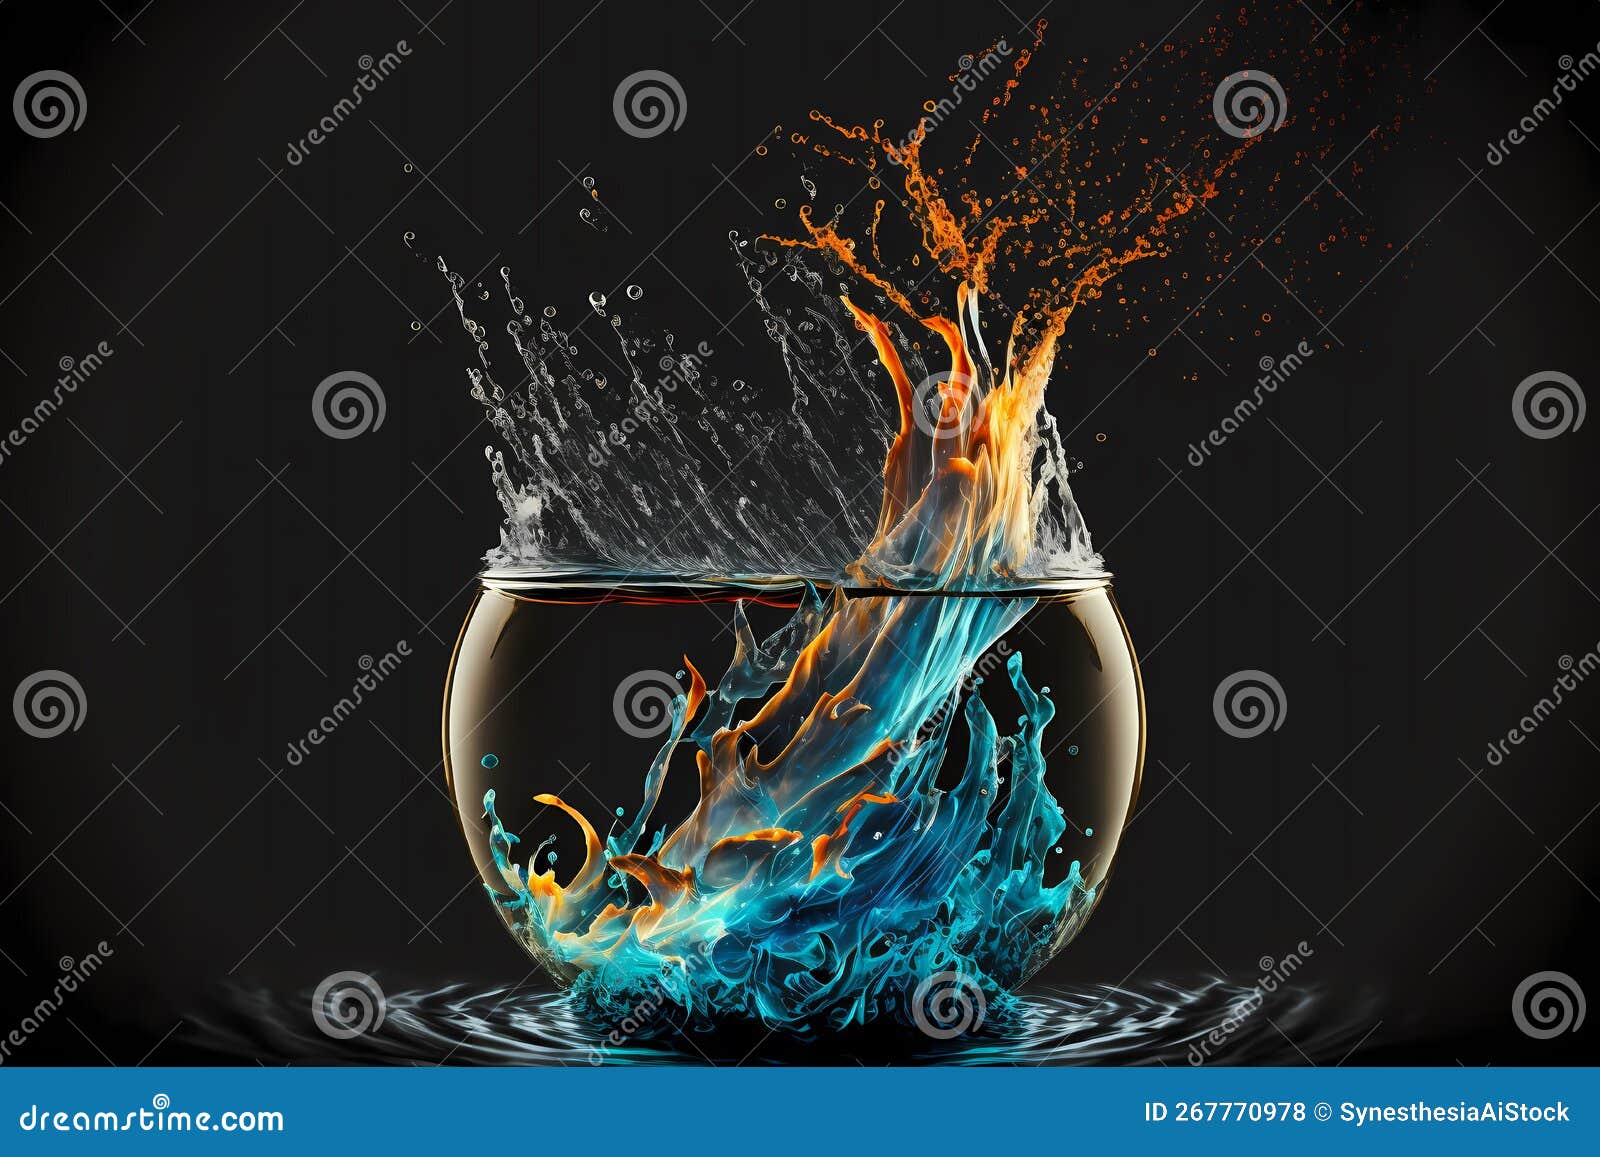 Respingos de fogo e água conceito dinâmico de dois elementos